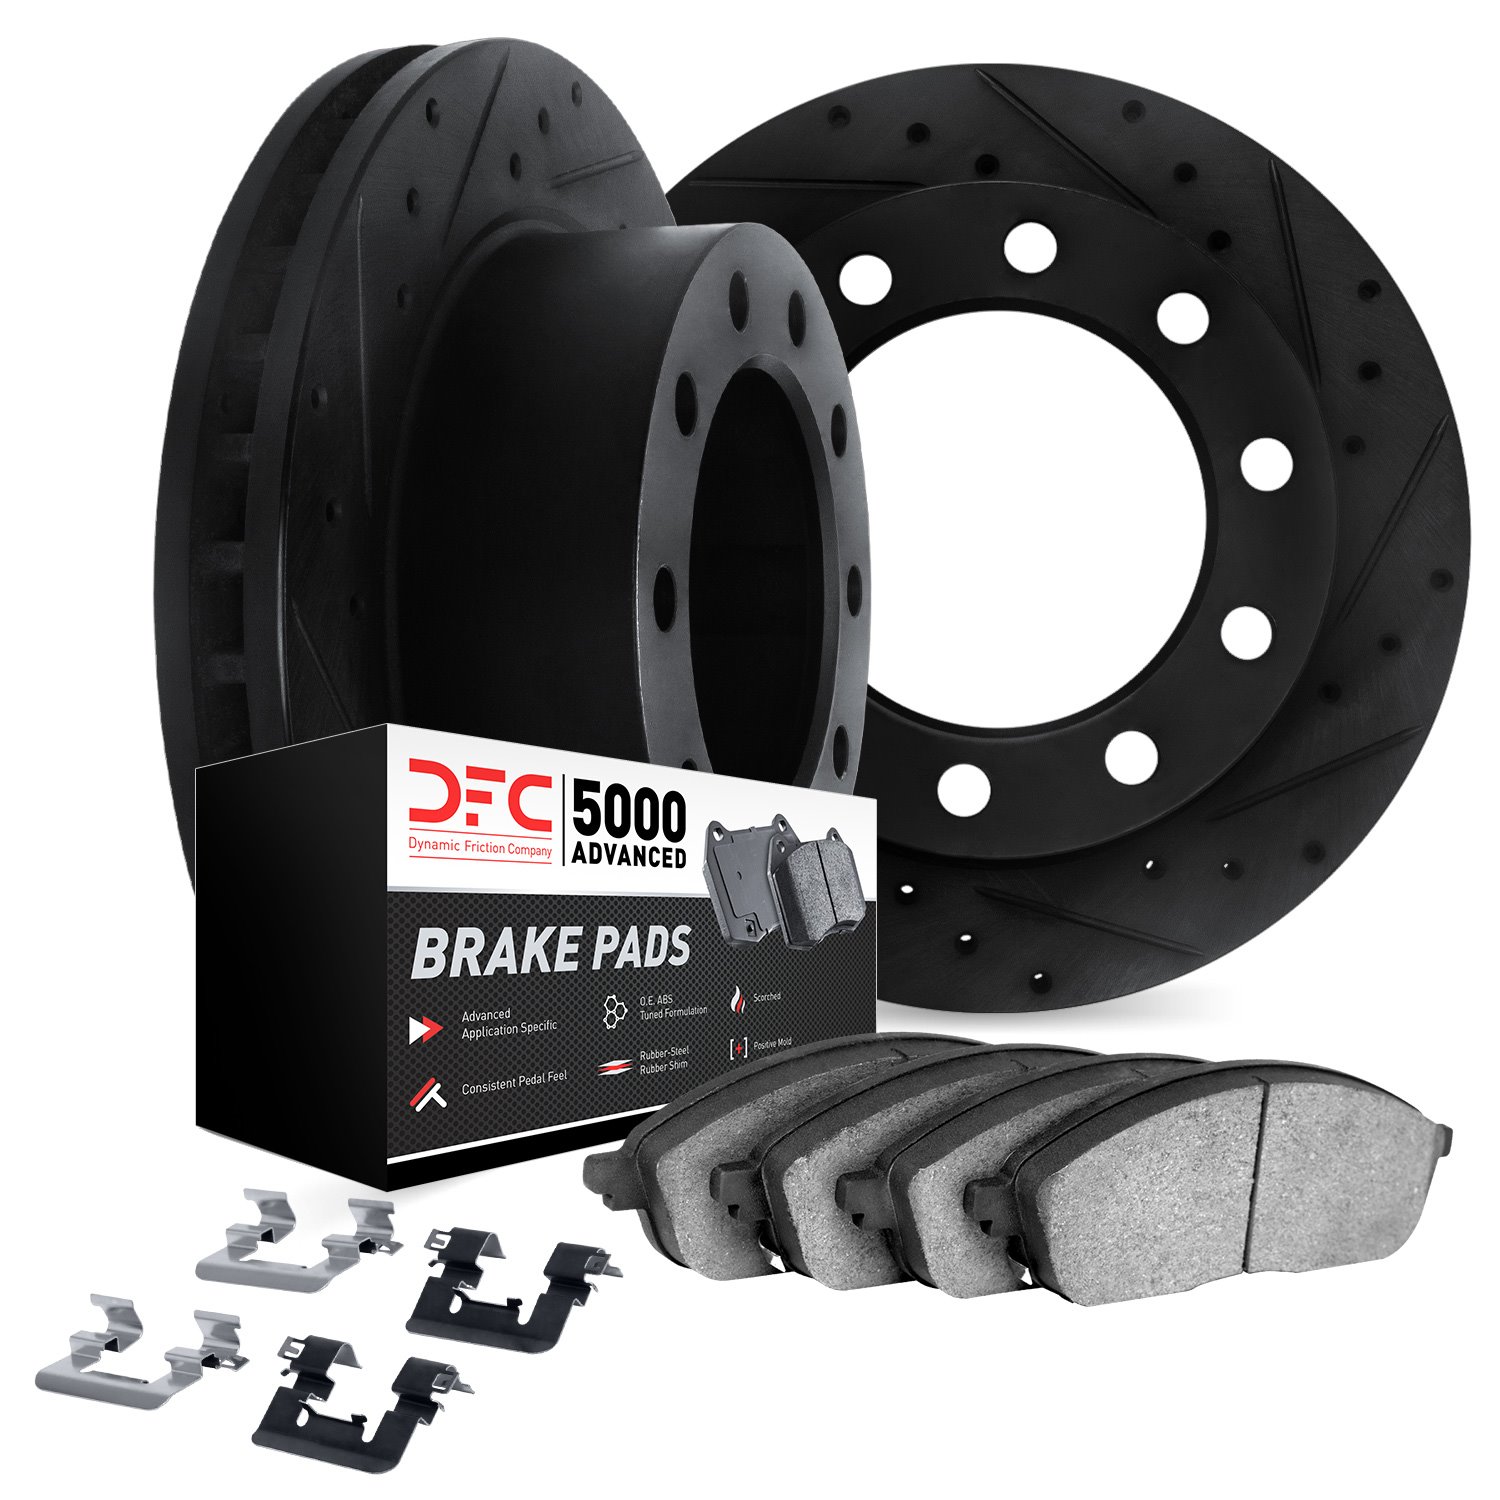 8512-99771 Drilled/Slotted Brake Rotors w/5000 Advanced Brake Pads Kit & Hardware [Black], Fits Select Multiple Makes/Models, Po